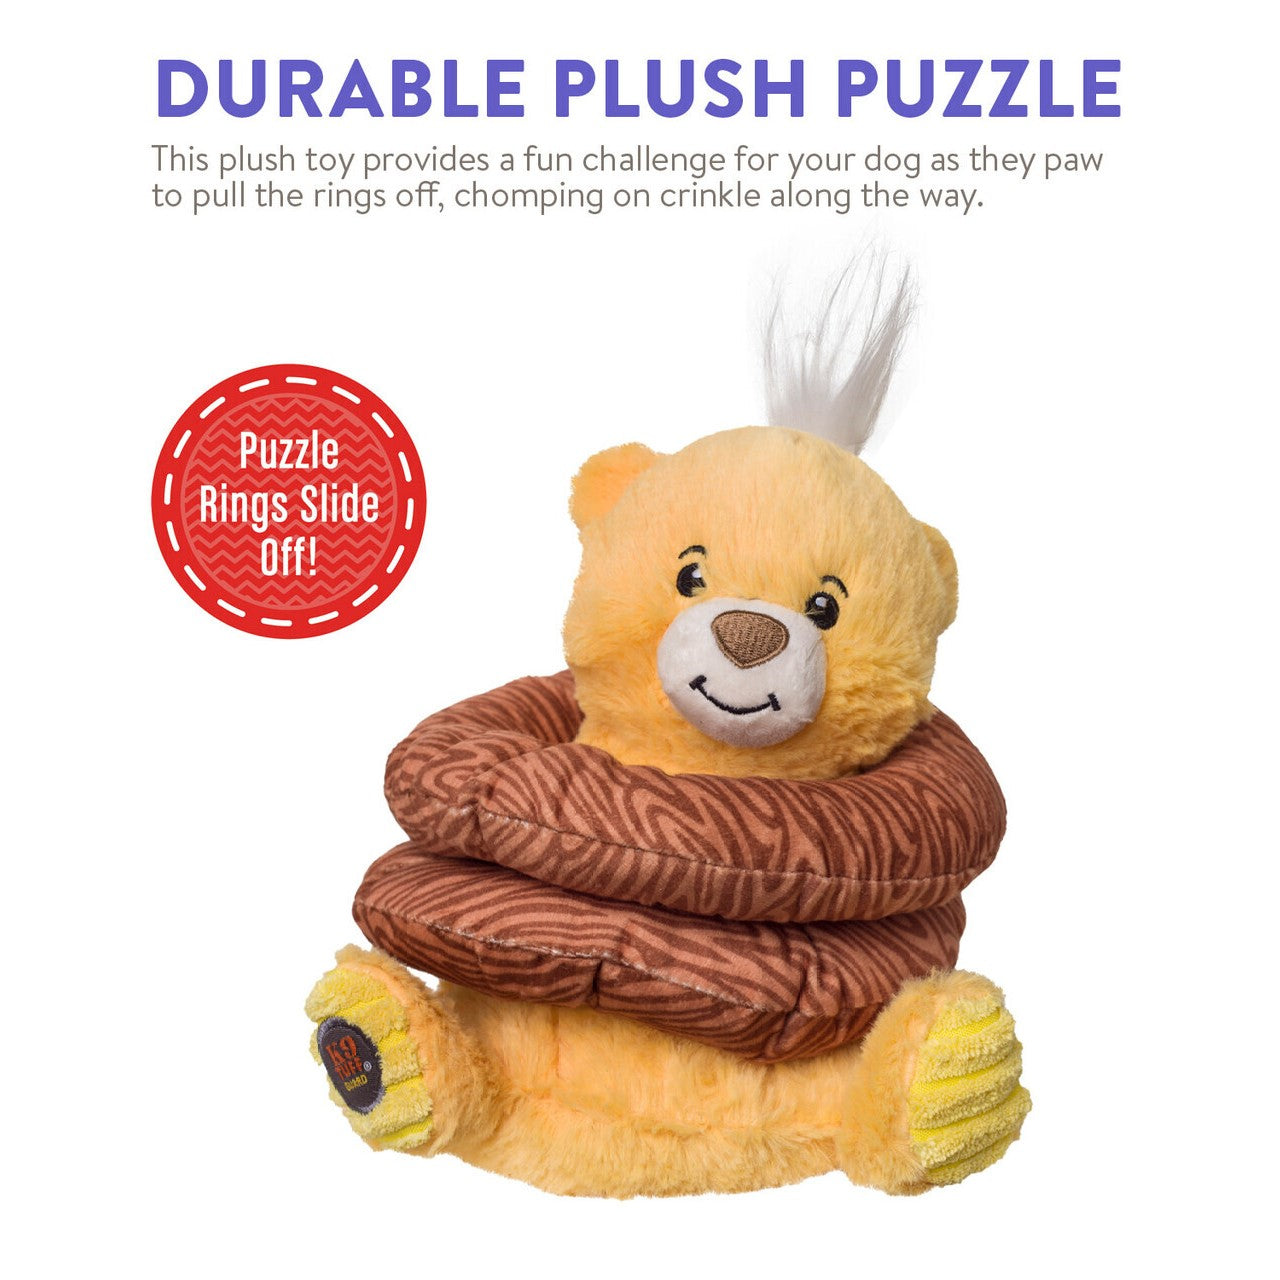 Charming Pet Ringamals  Bear  |  Plush Puzzle Squeaky Dog Toy